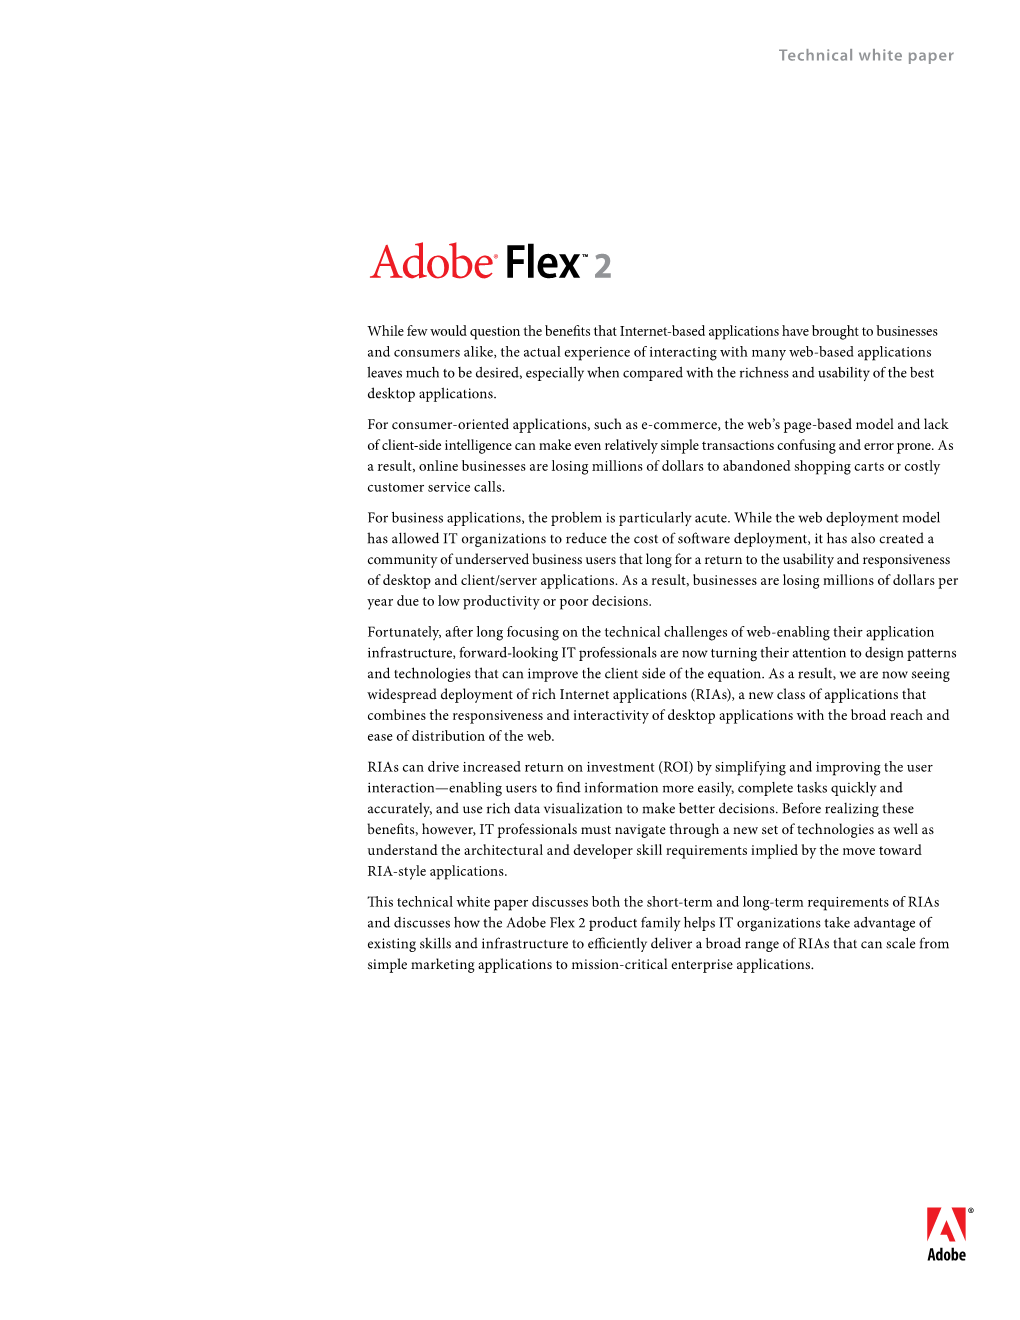 Adobe® Flex™ 2